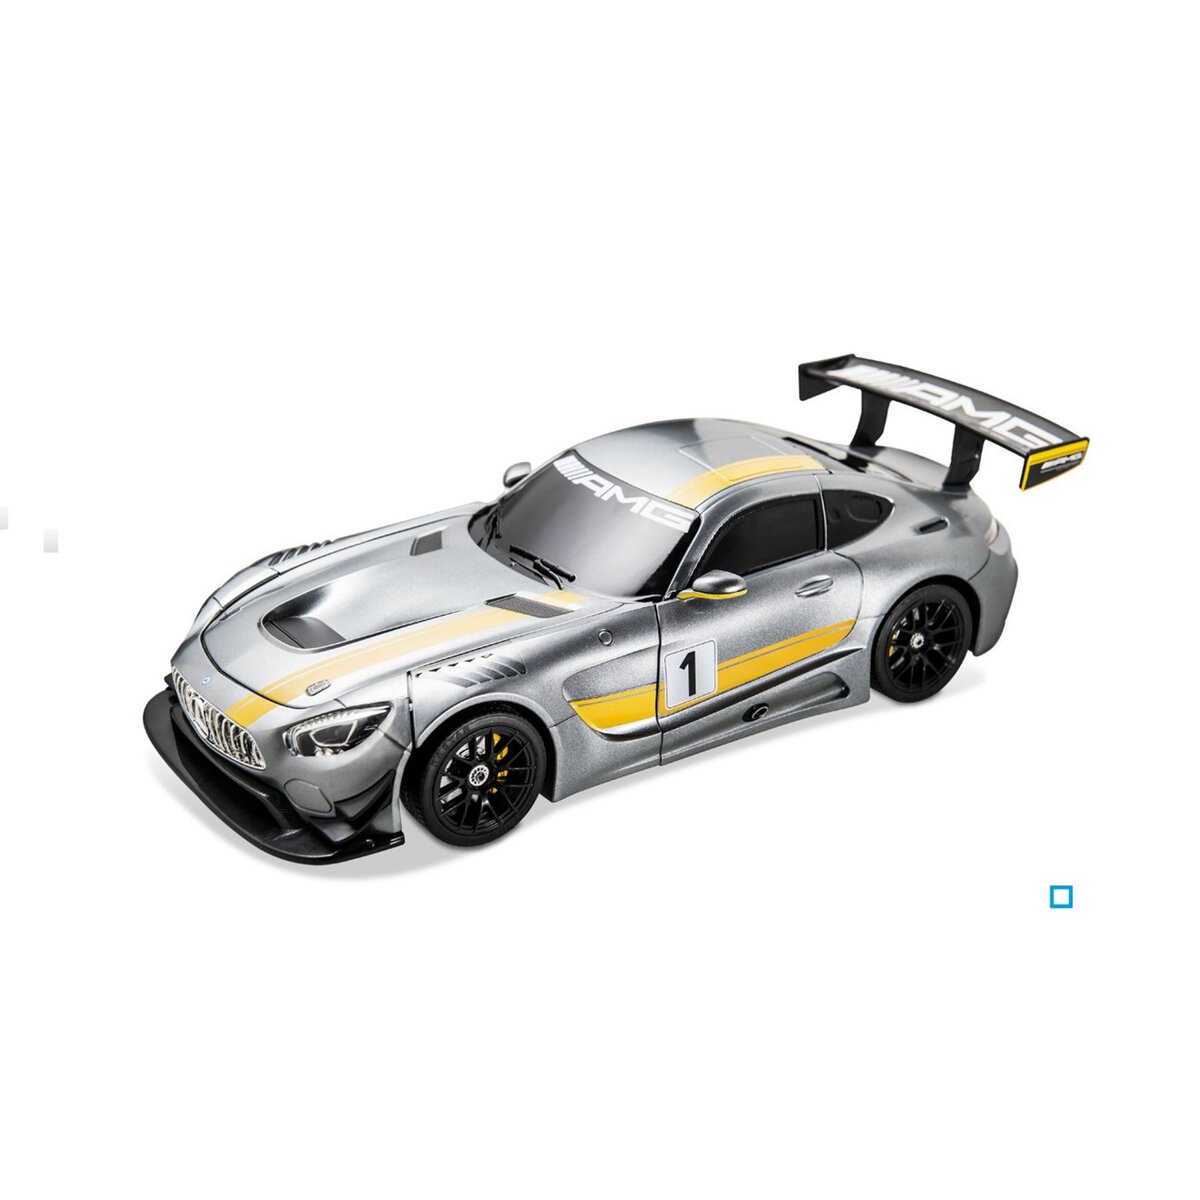 MONDO Véhicule radiocommandé - Mercedes AMG GT3 transformable grise